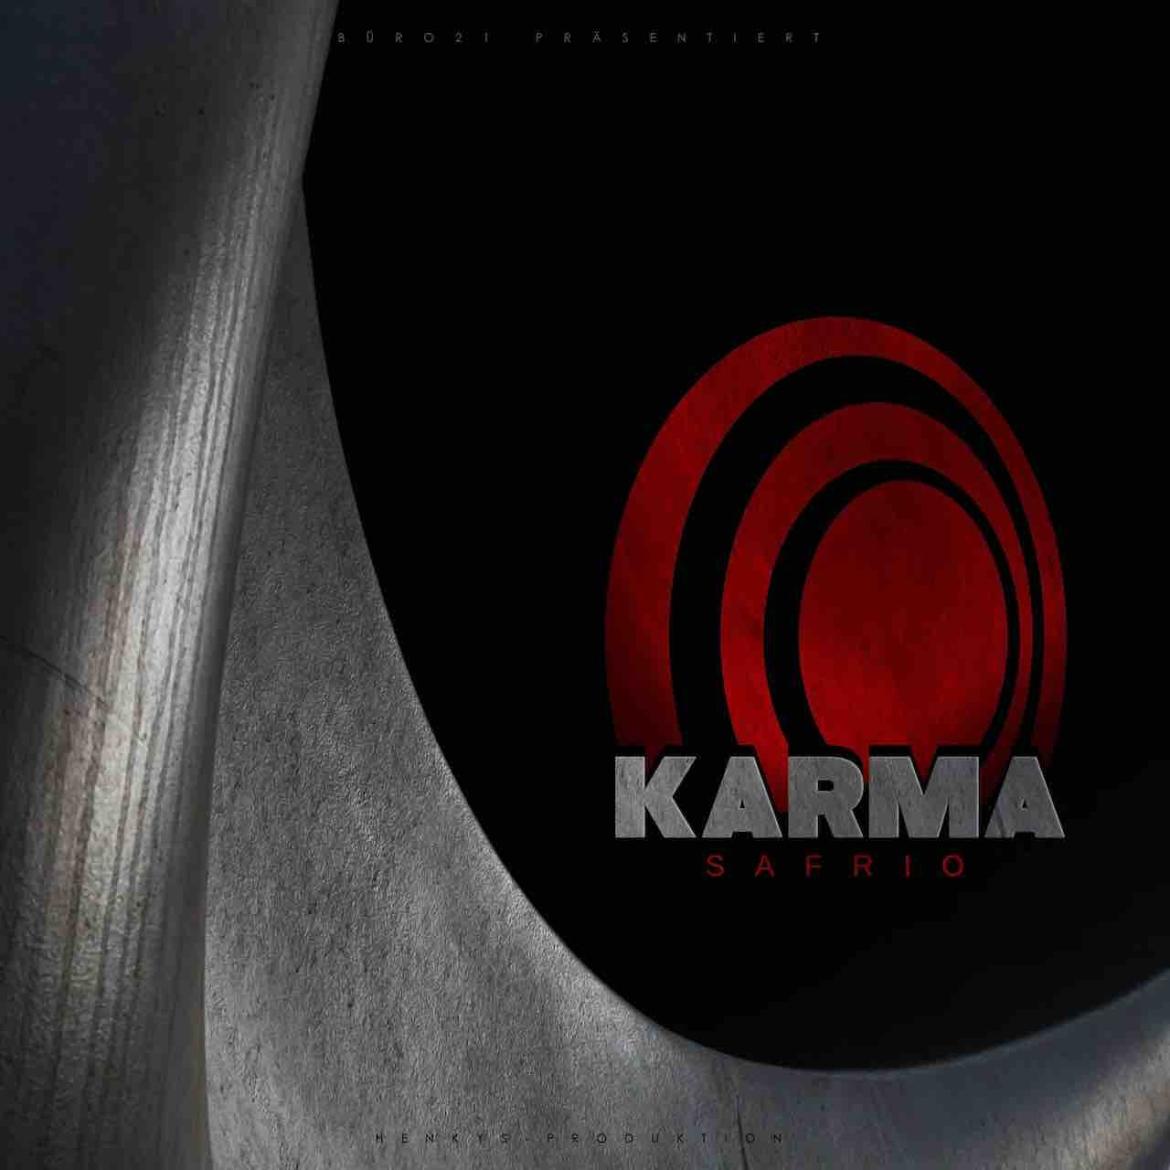 Cover - "SafriO - Karma"